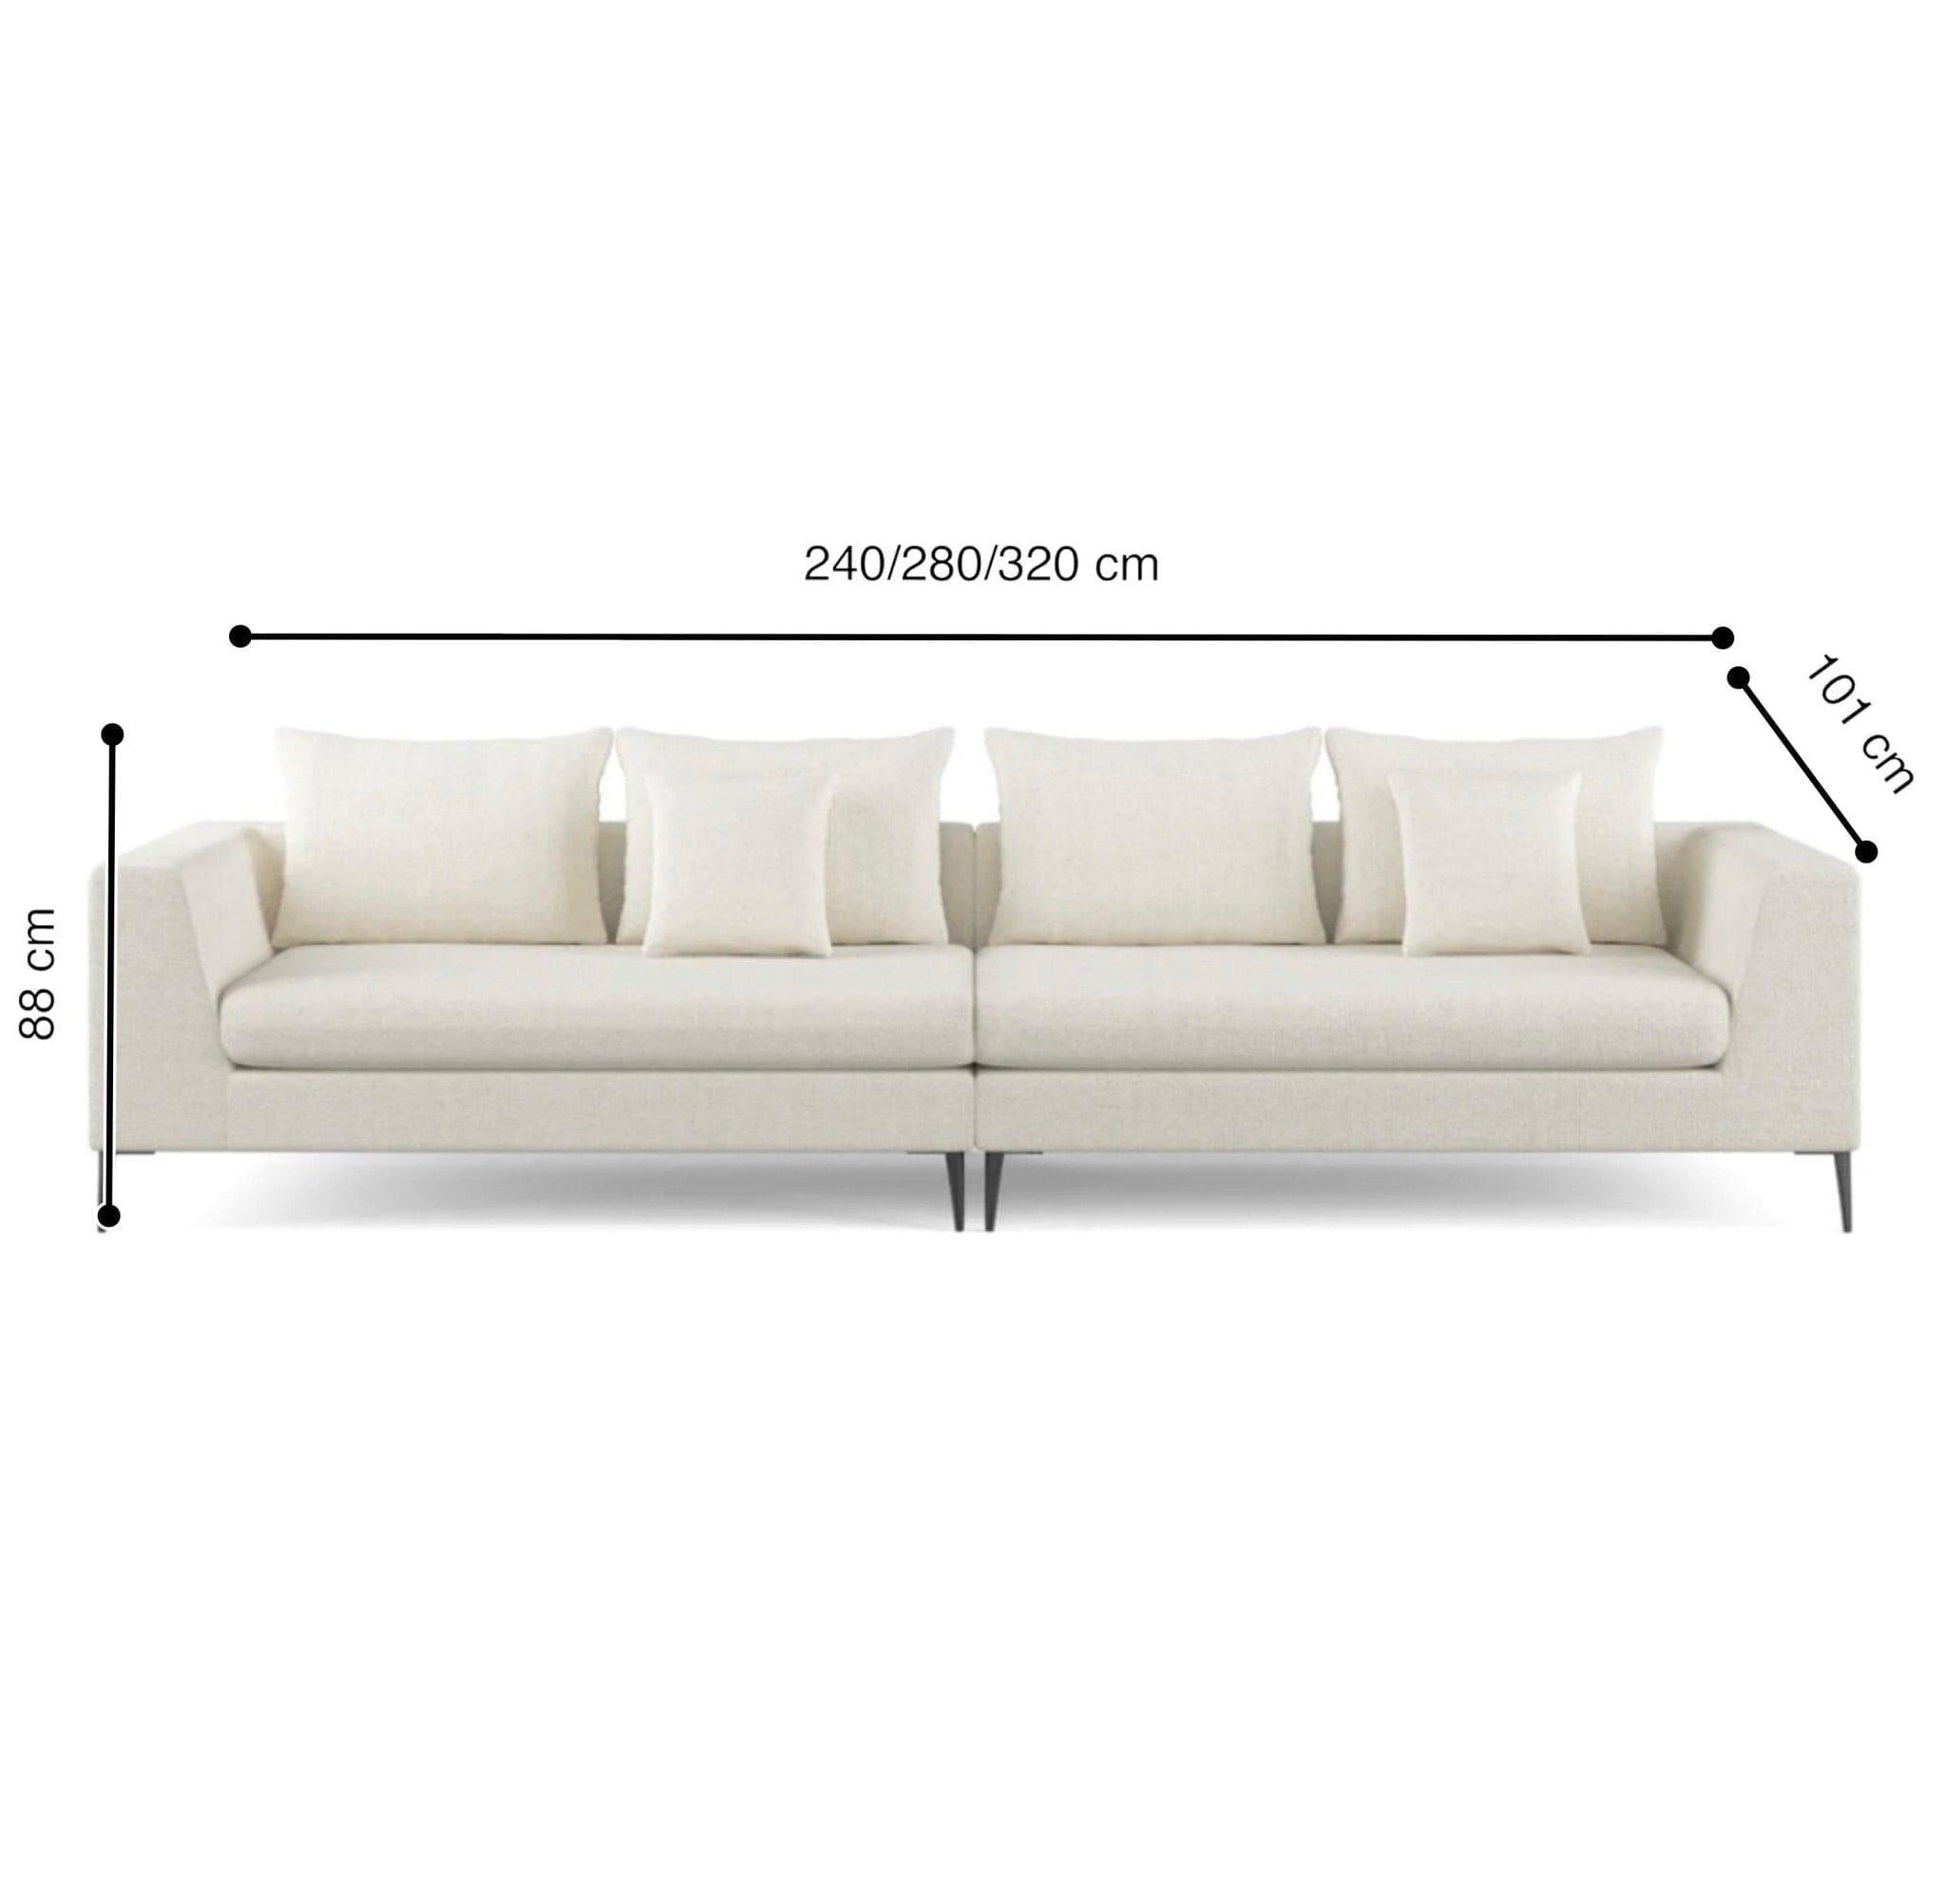 Home Atelier Cotton Linen Fabric / 4 seater/ Length 240cm / Cream Arellano Sectional Sofa